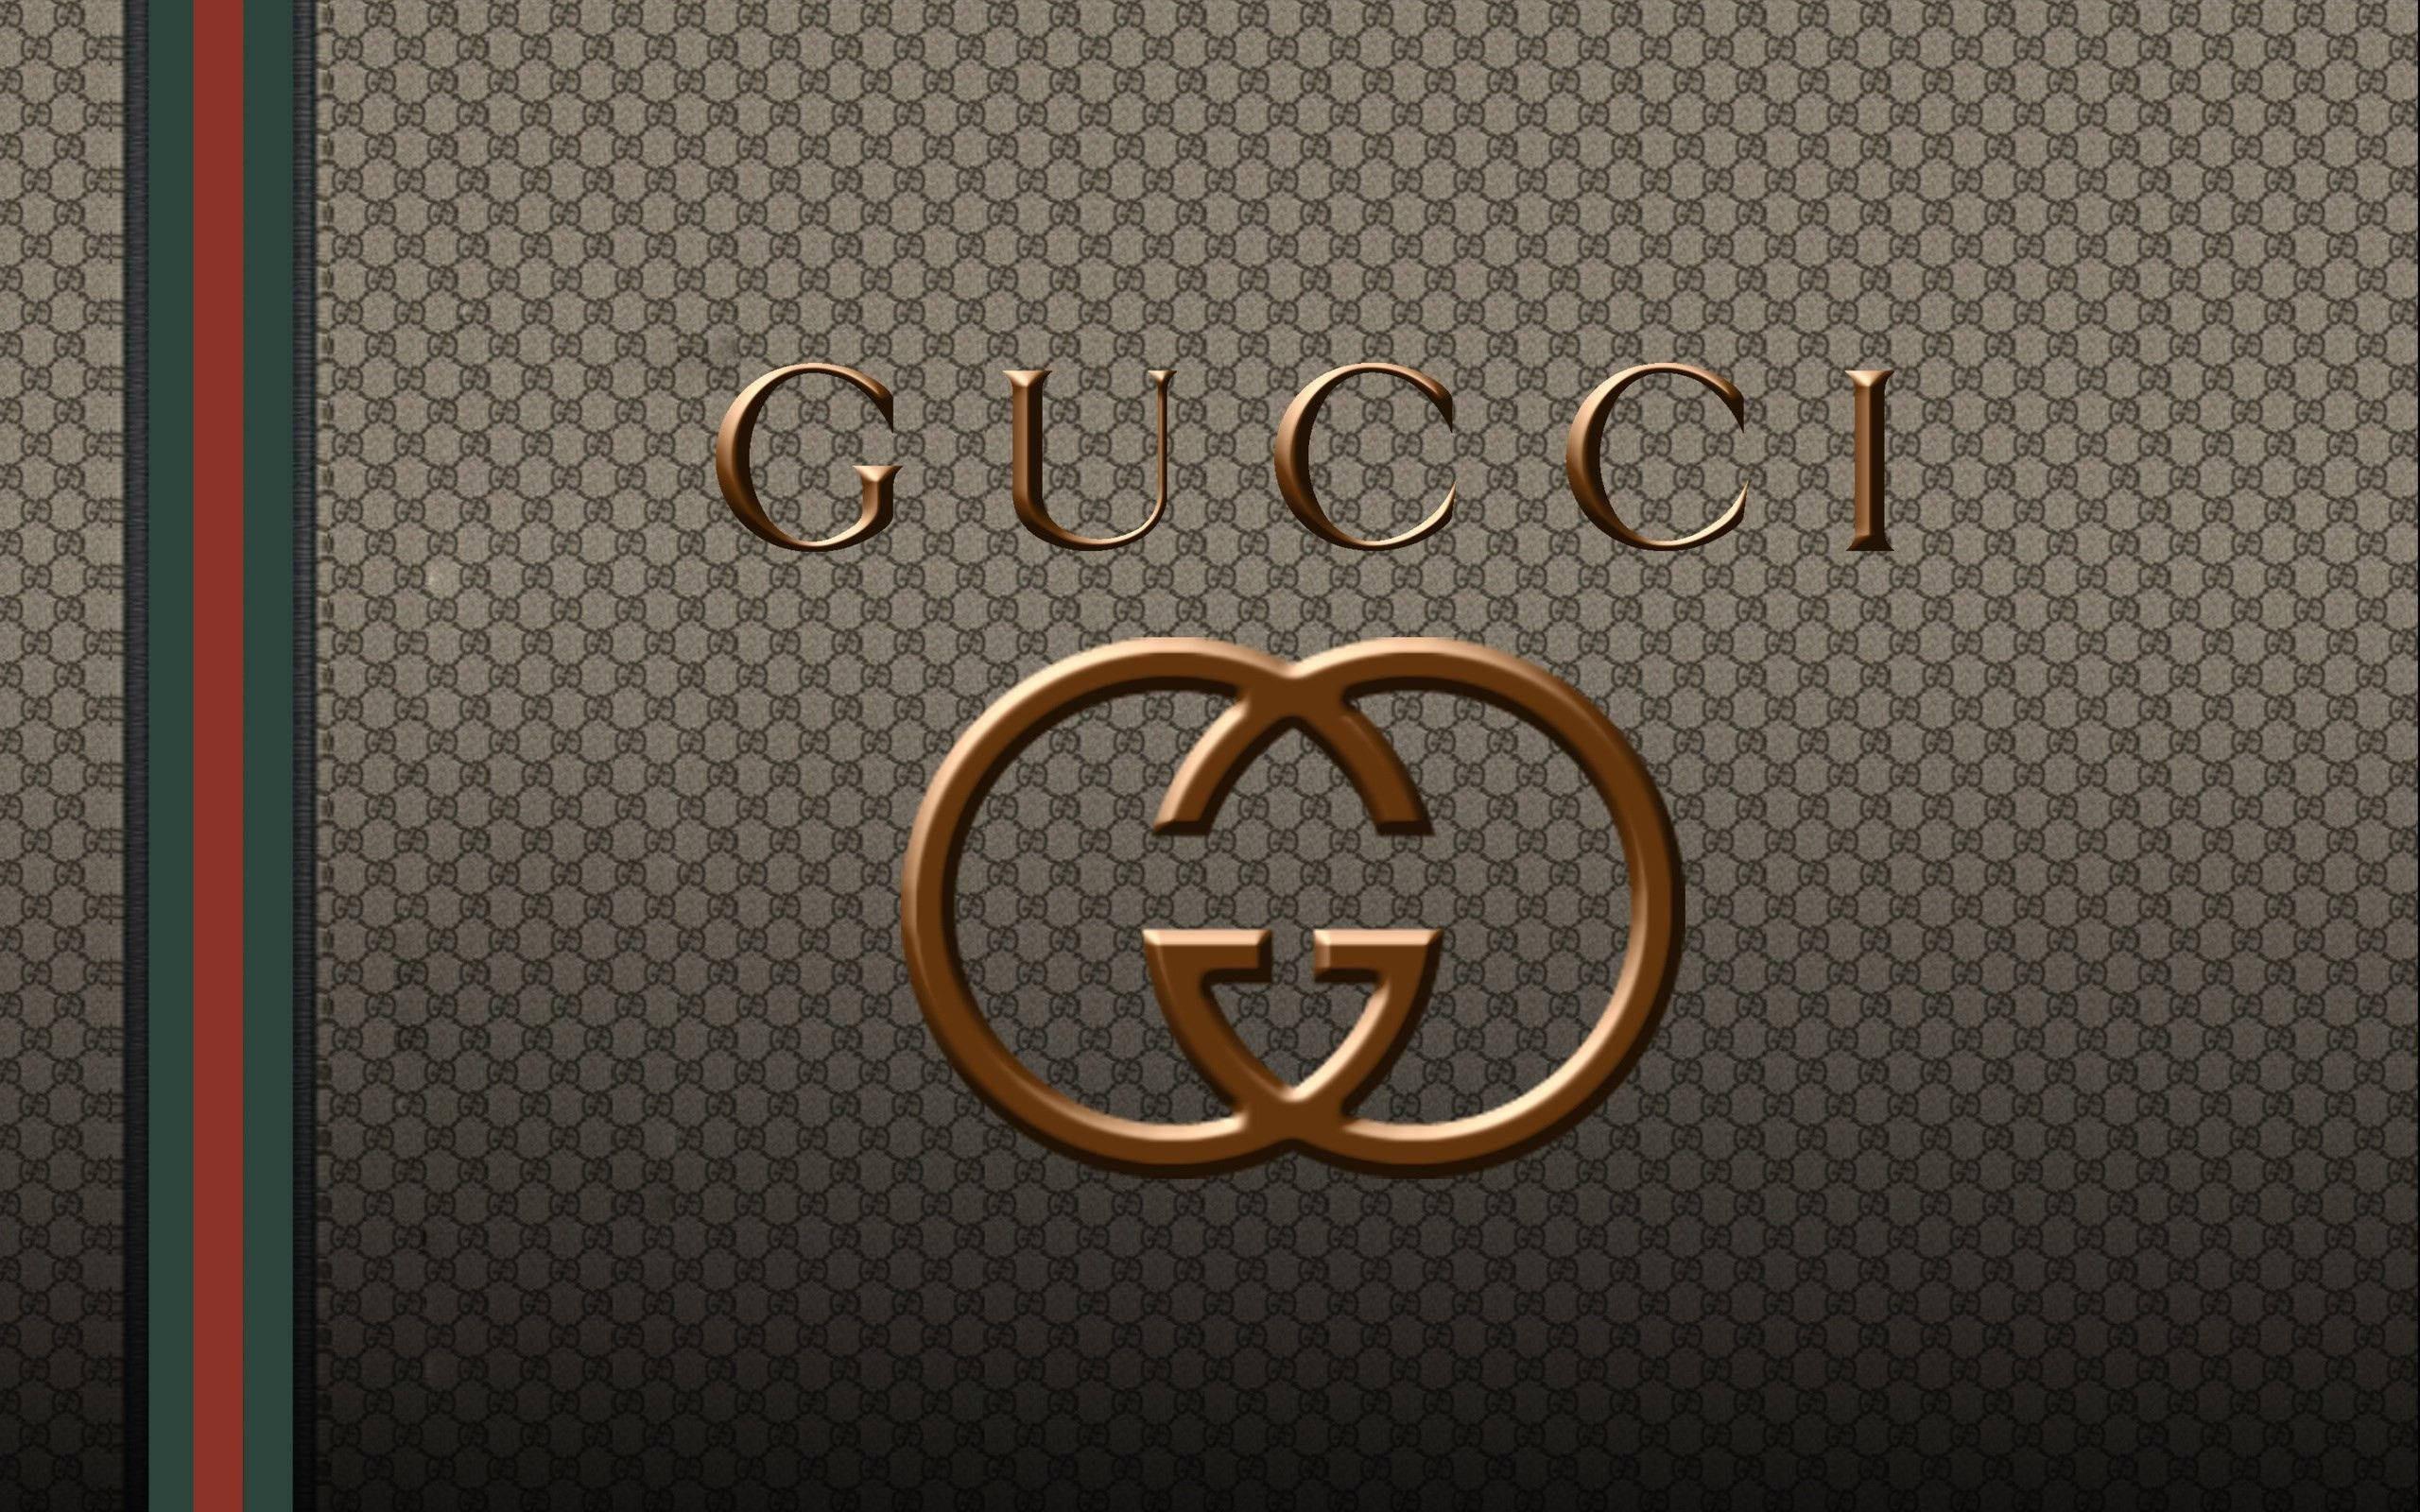 Marrónen Relieve Clásico Gucci 4k. Fondo de pantalla